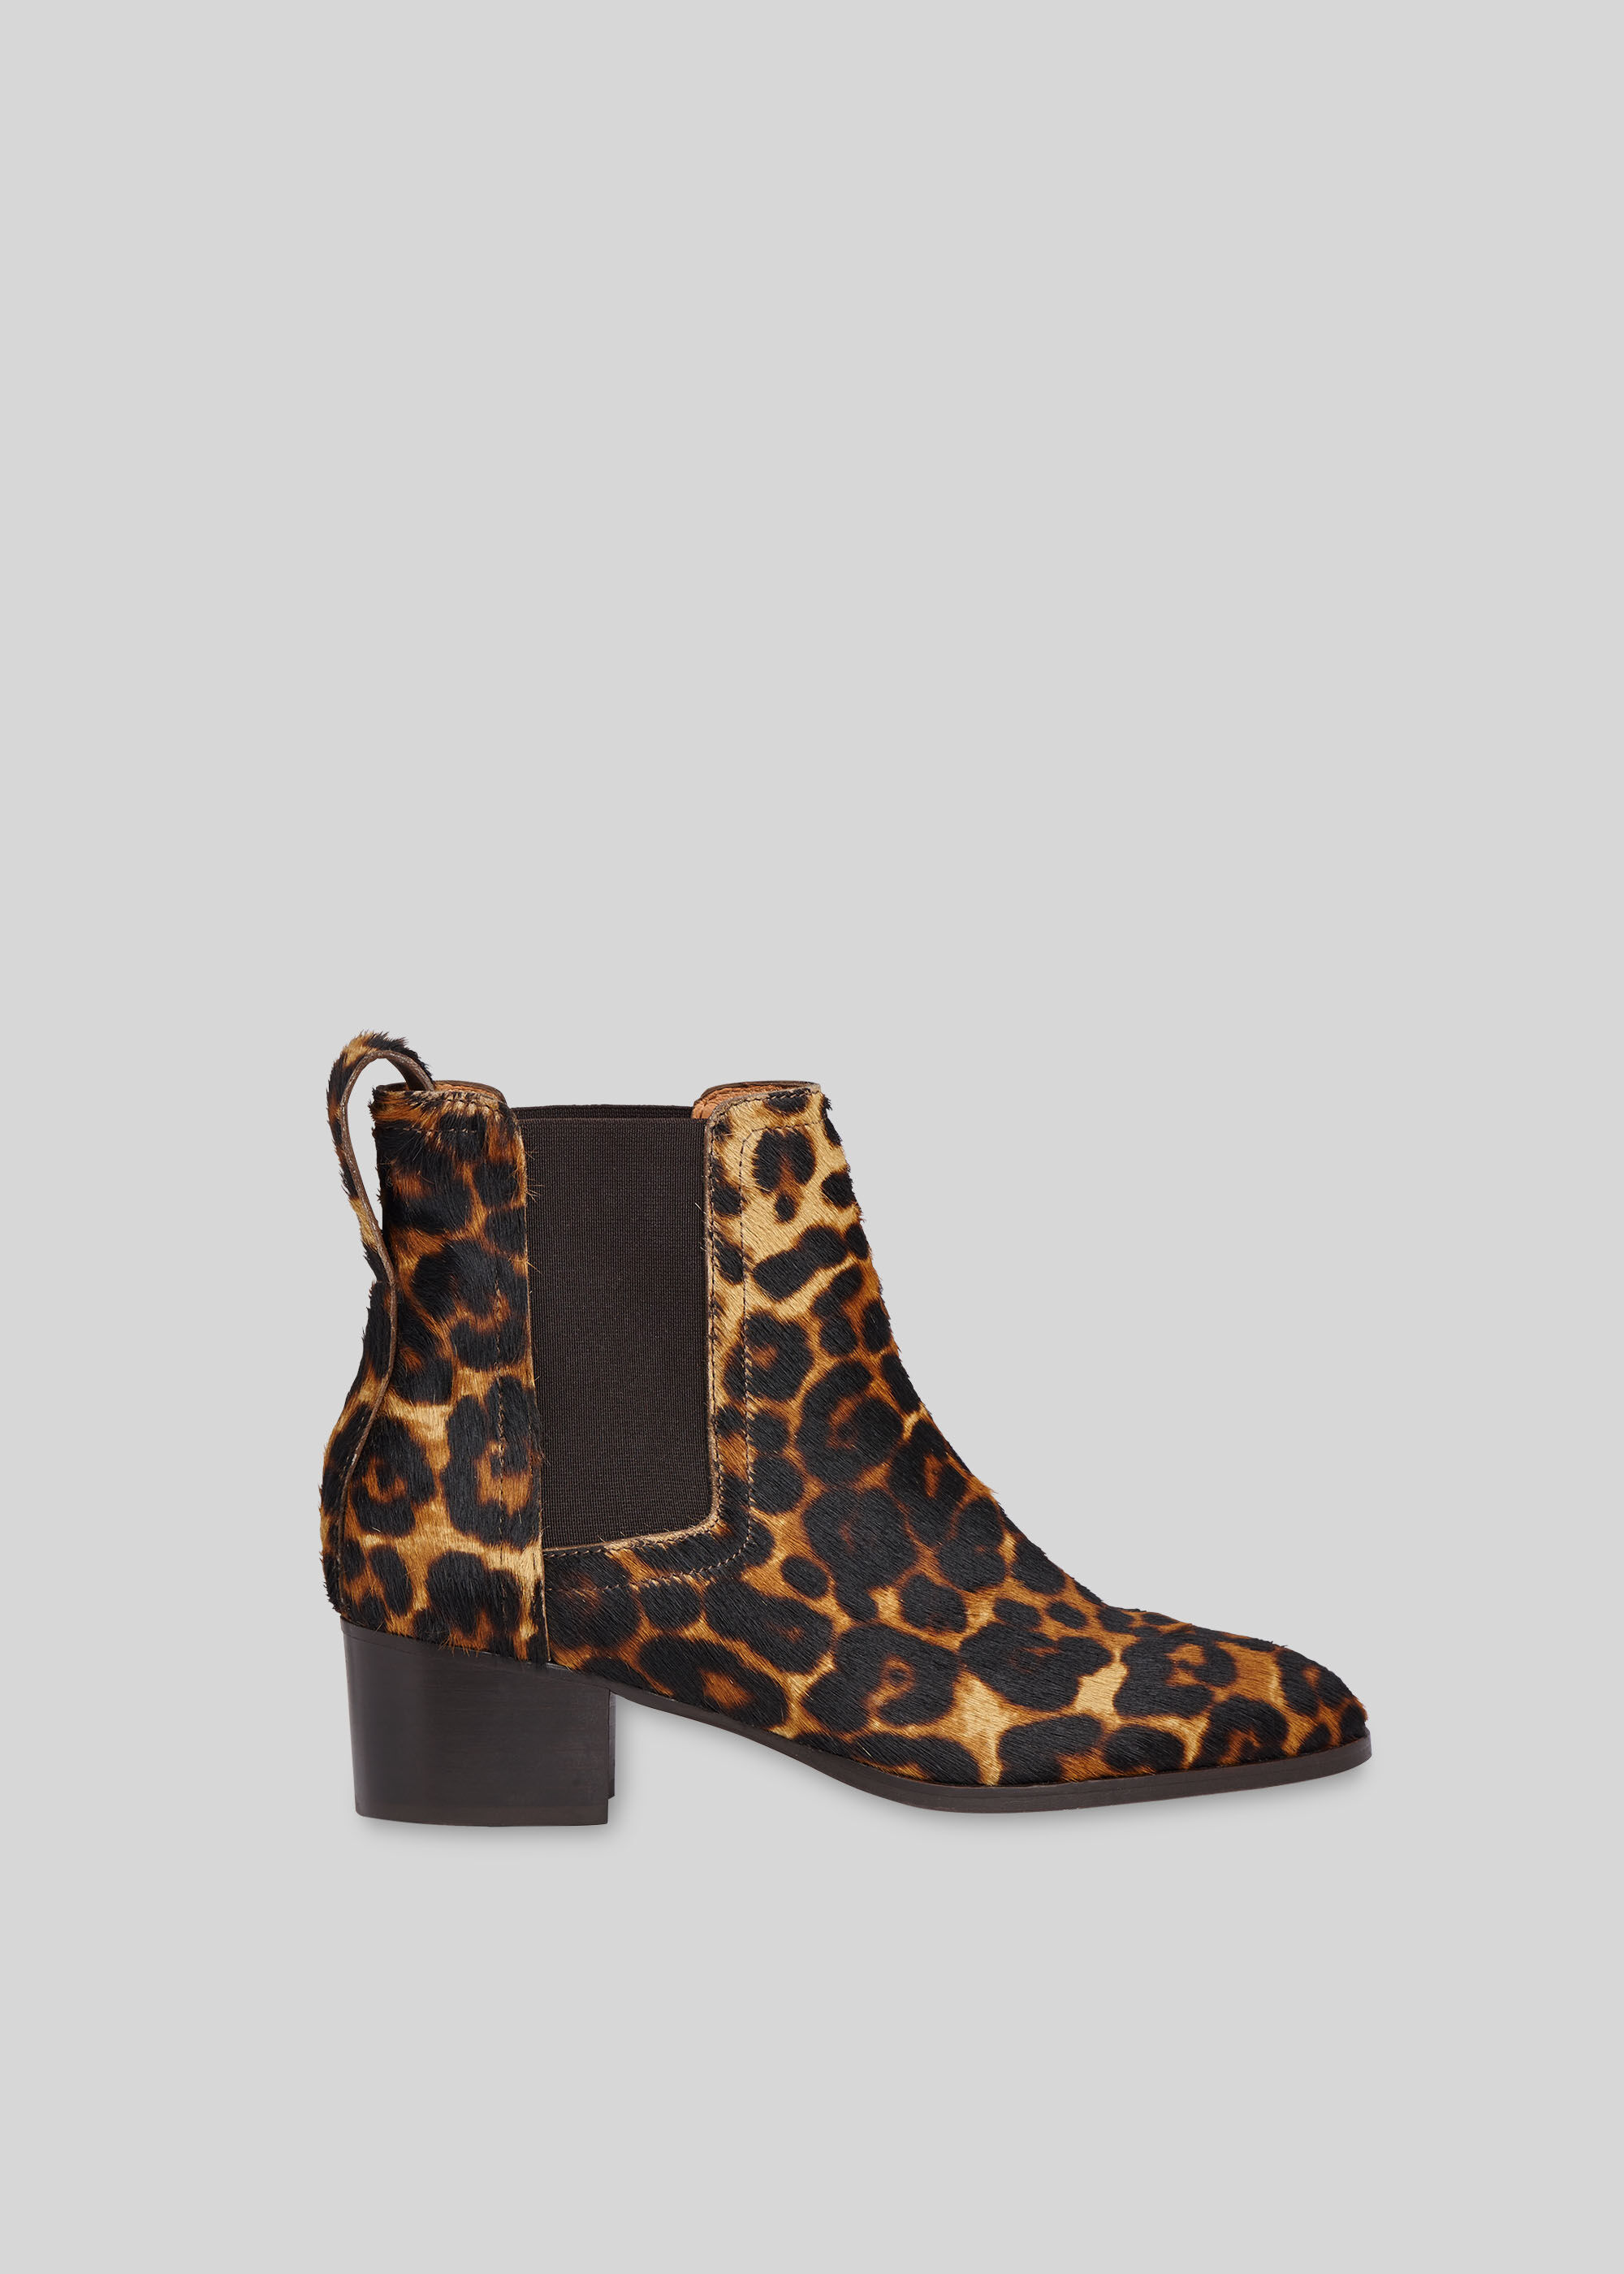 Details about   Womens Ladies Leopard V Low Cuban Heels Ankle Riding Boots Casual Shoes SZ B134 